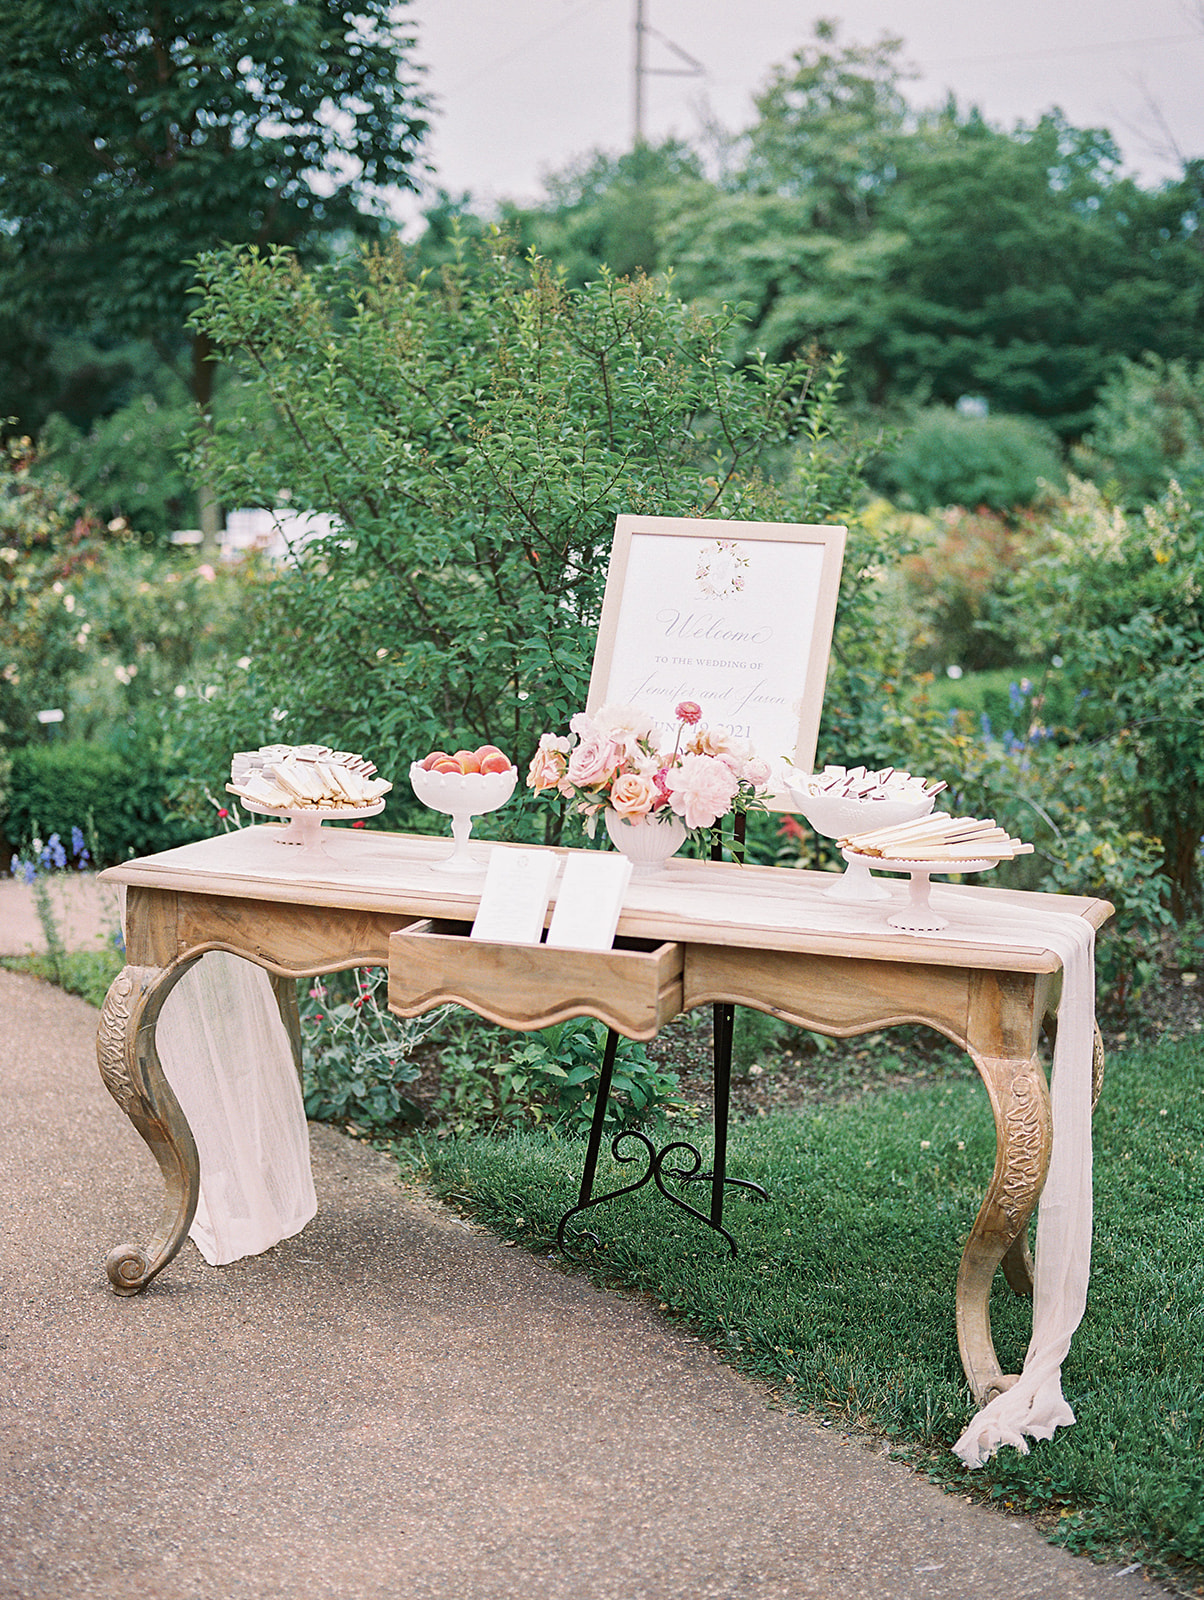 parisian inspired welcome table at peachy spring Bartram's Garden wedding